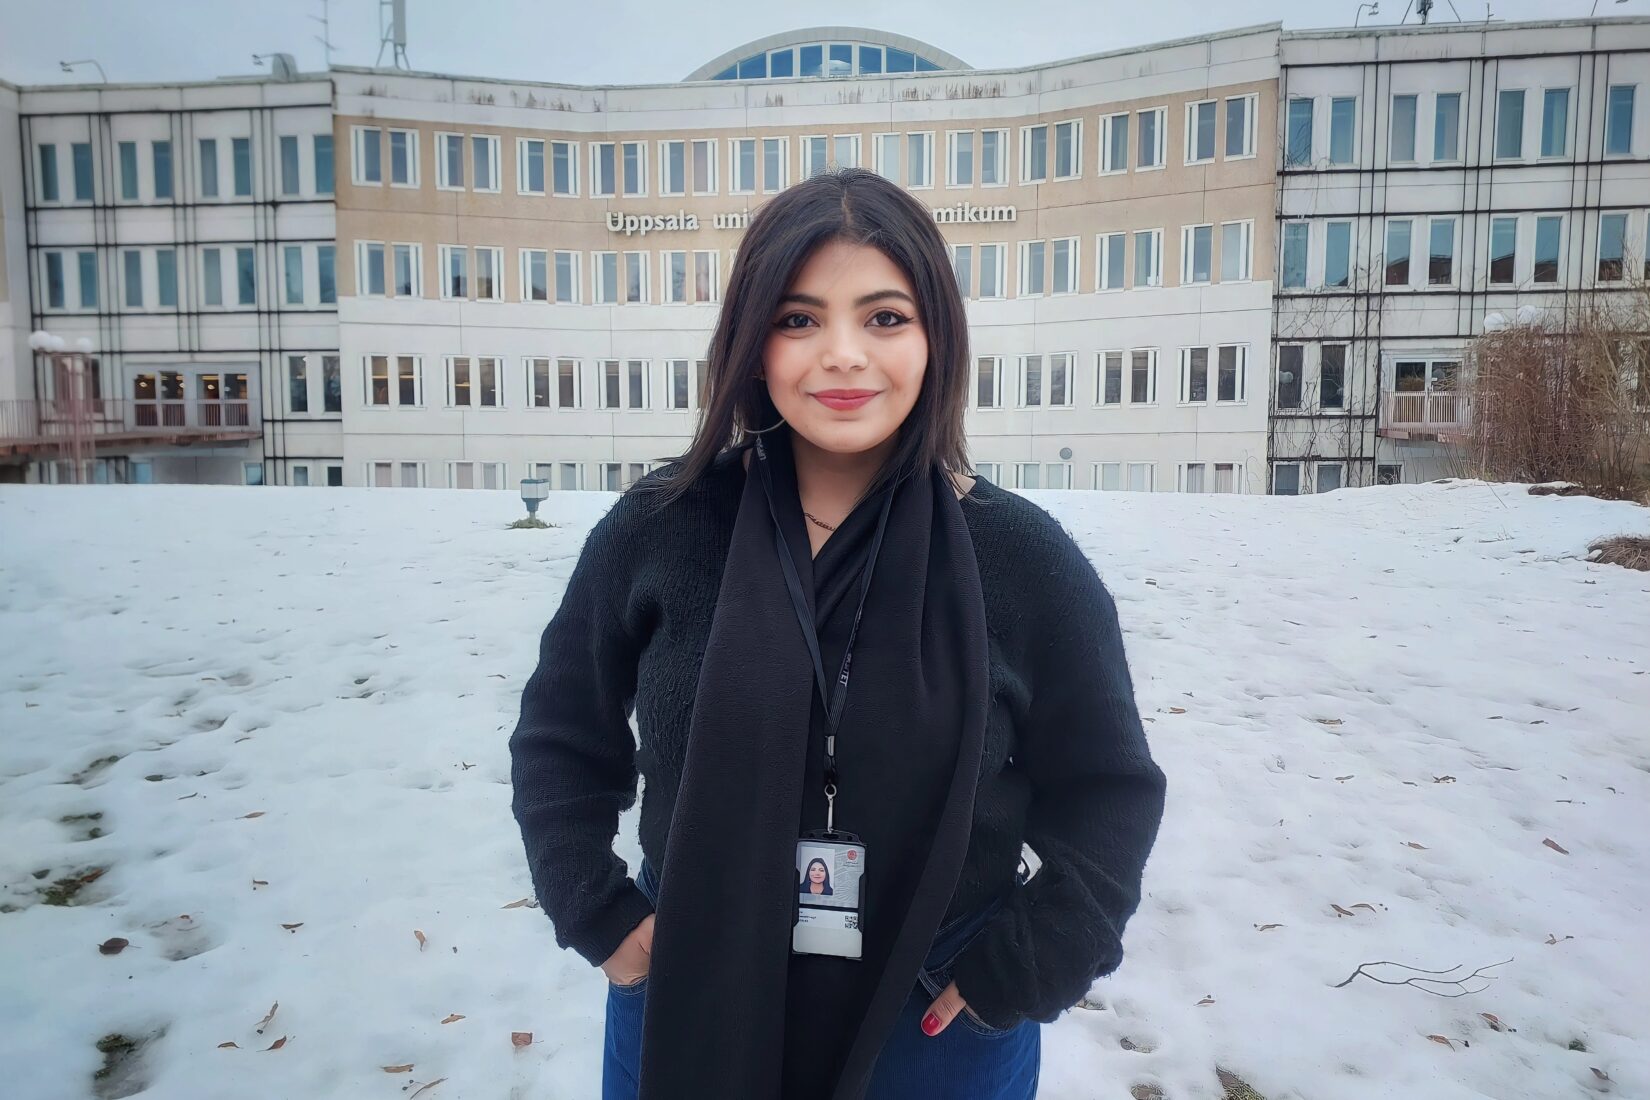 Photo of Aya standing in front of Uppsala university building